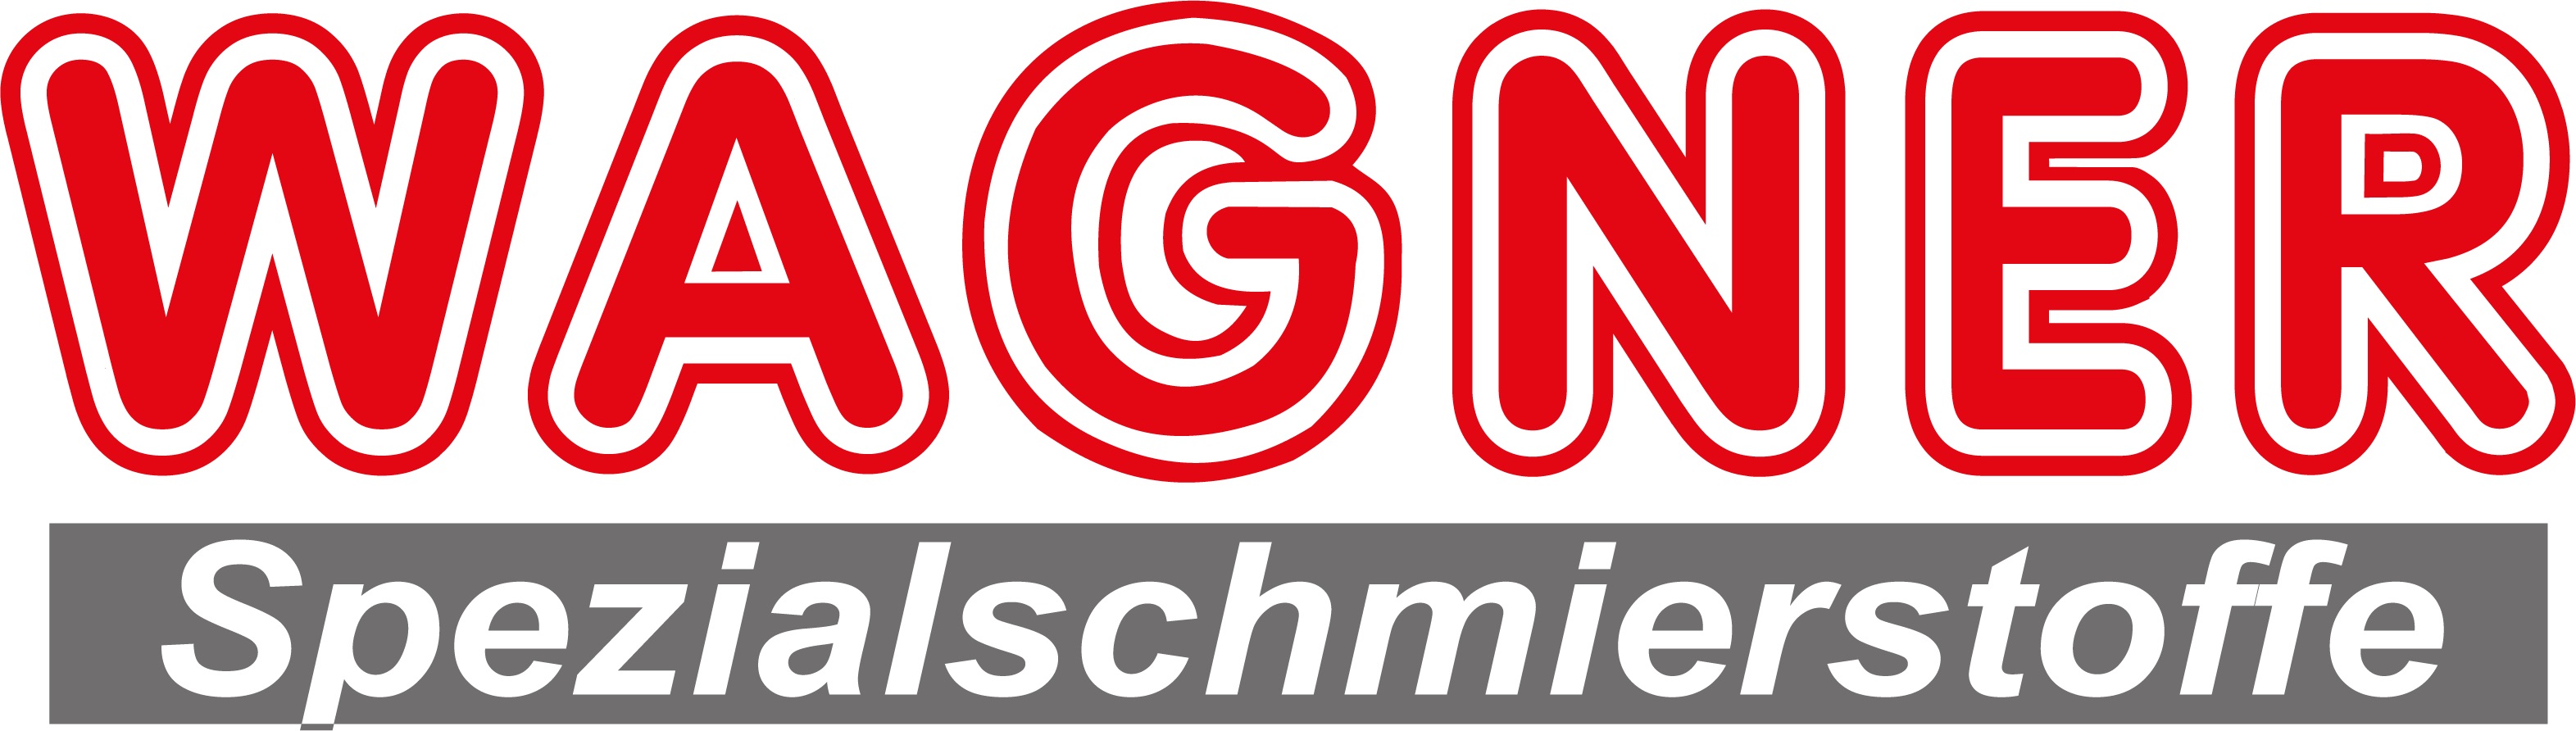 WAGNER Spezialschmierstoffe GmbH & Co. KG